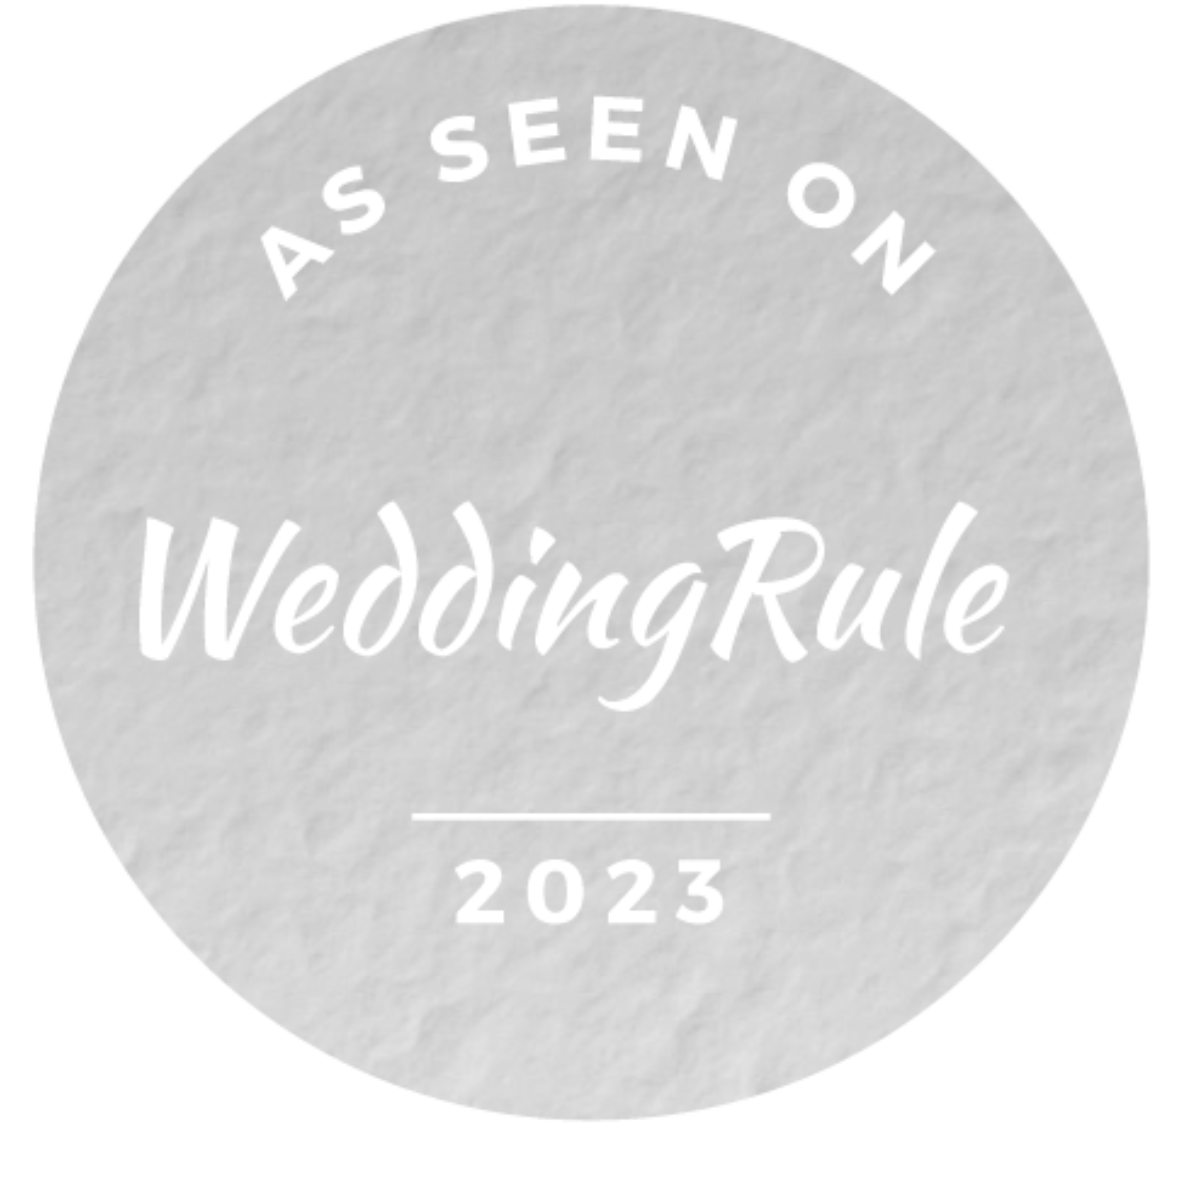 As seen on Wedding Rule 2023